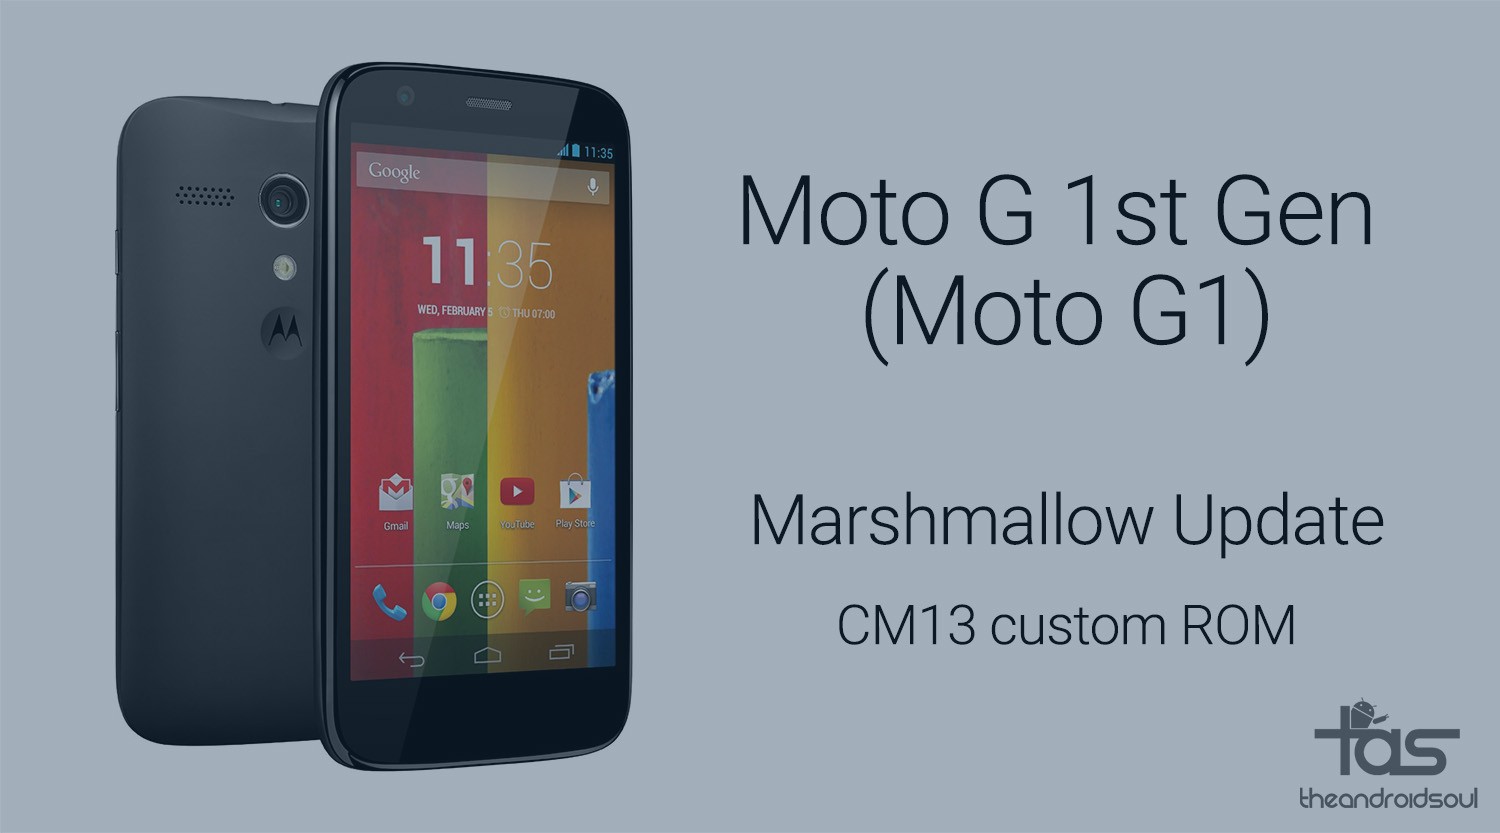 Obtenga la actualización Marshmallow de Moto G 1st Gen (G1) a través de la ROM CM13